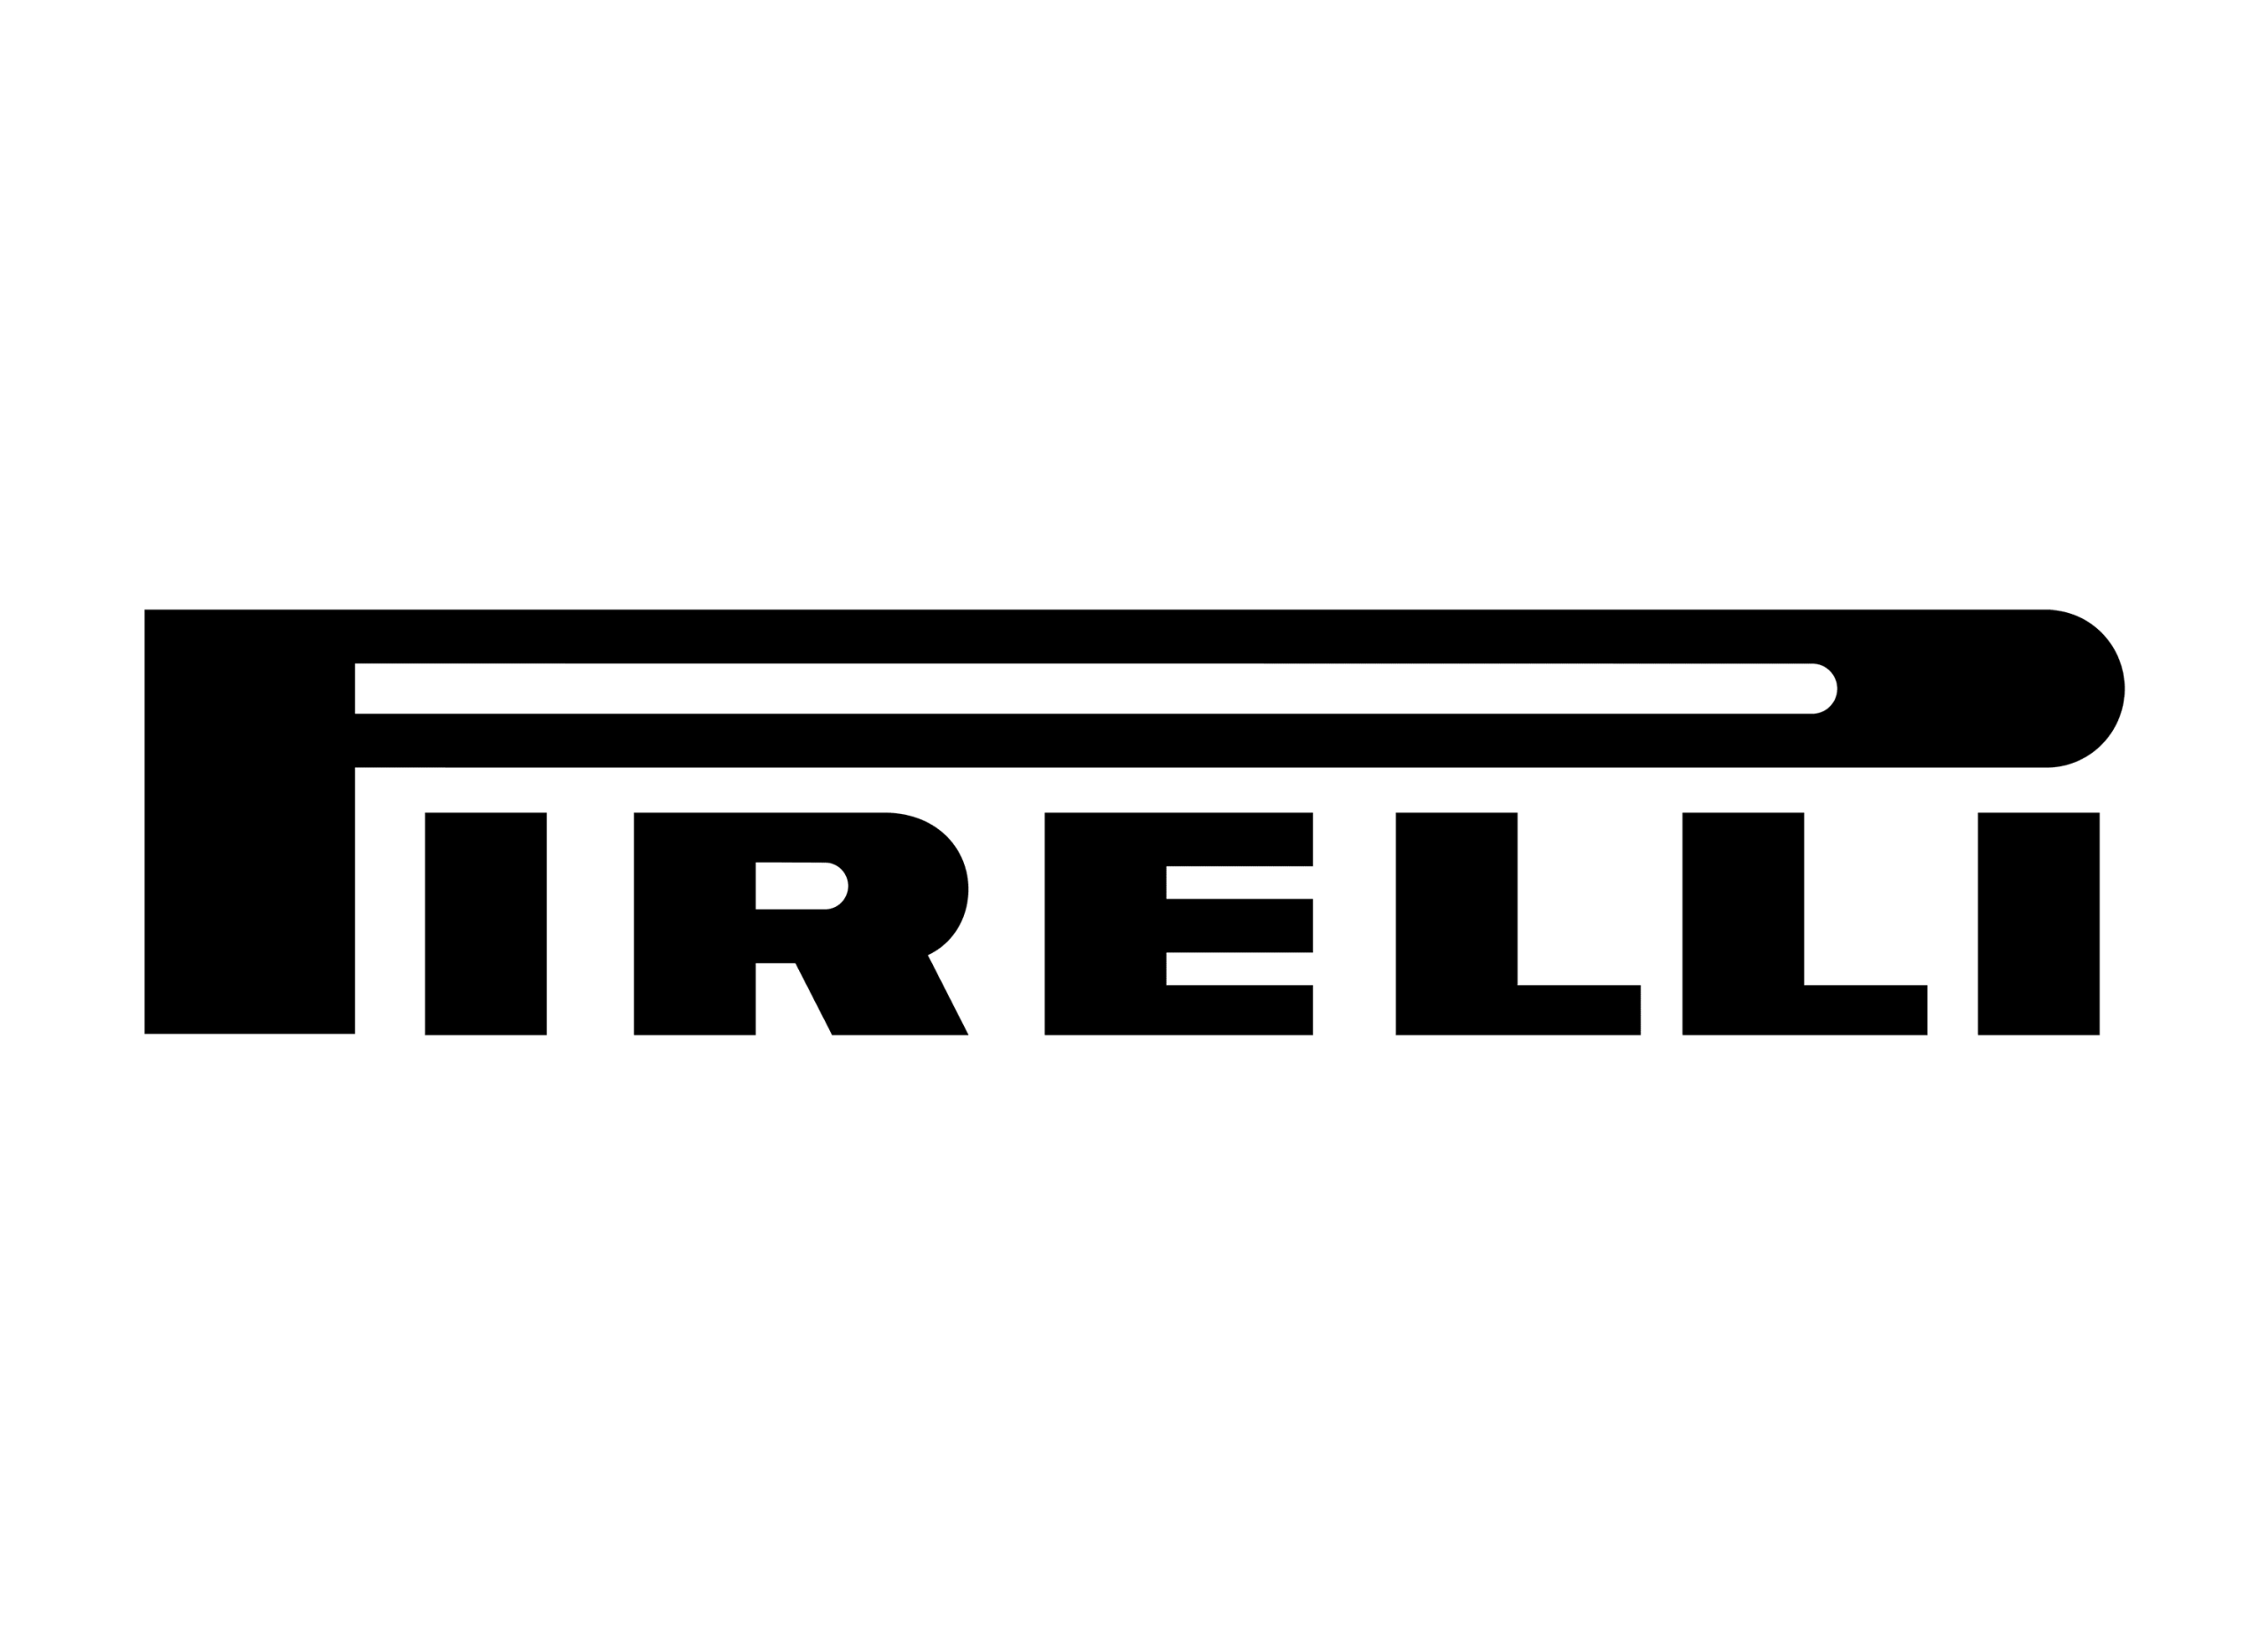 Pirelli logo 1948-1974